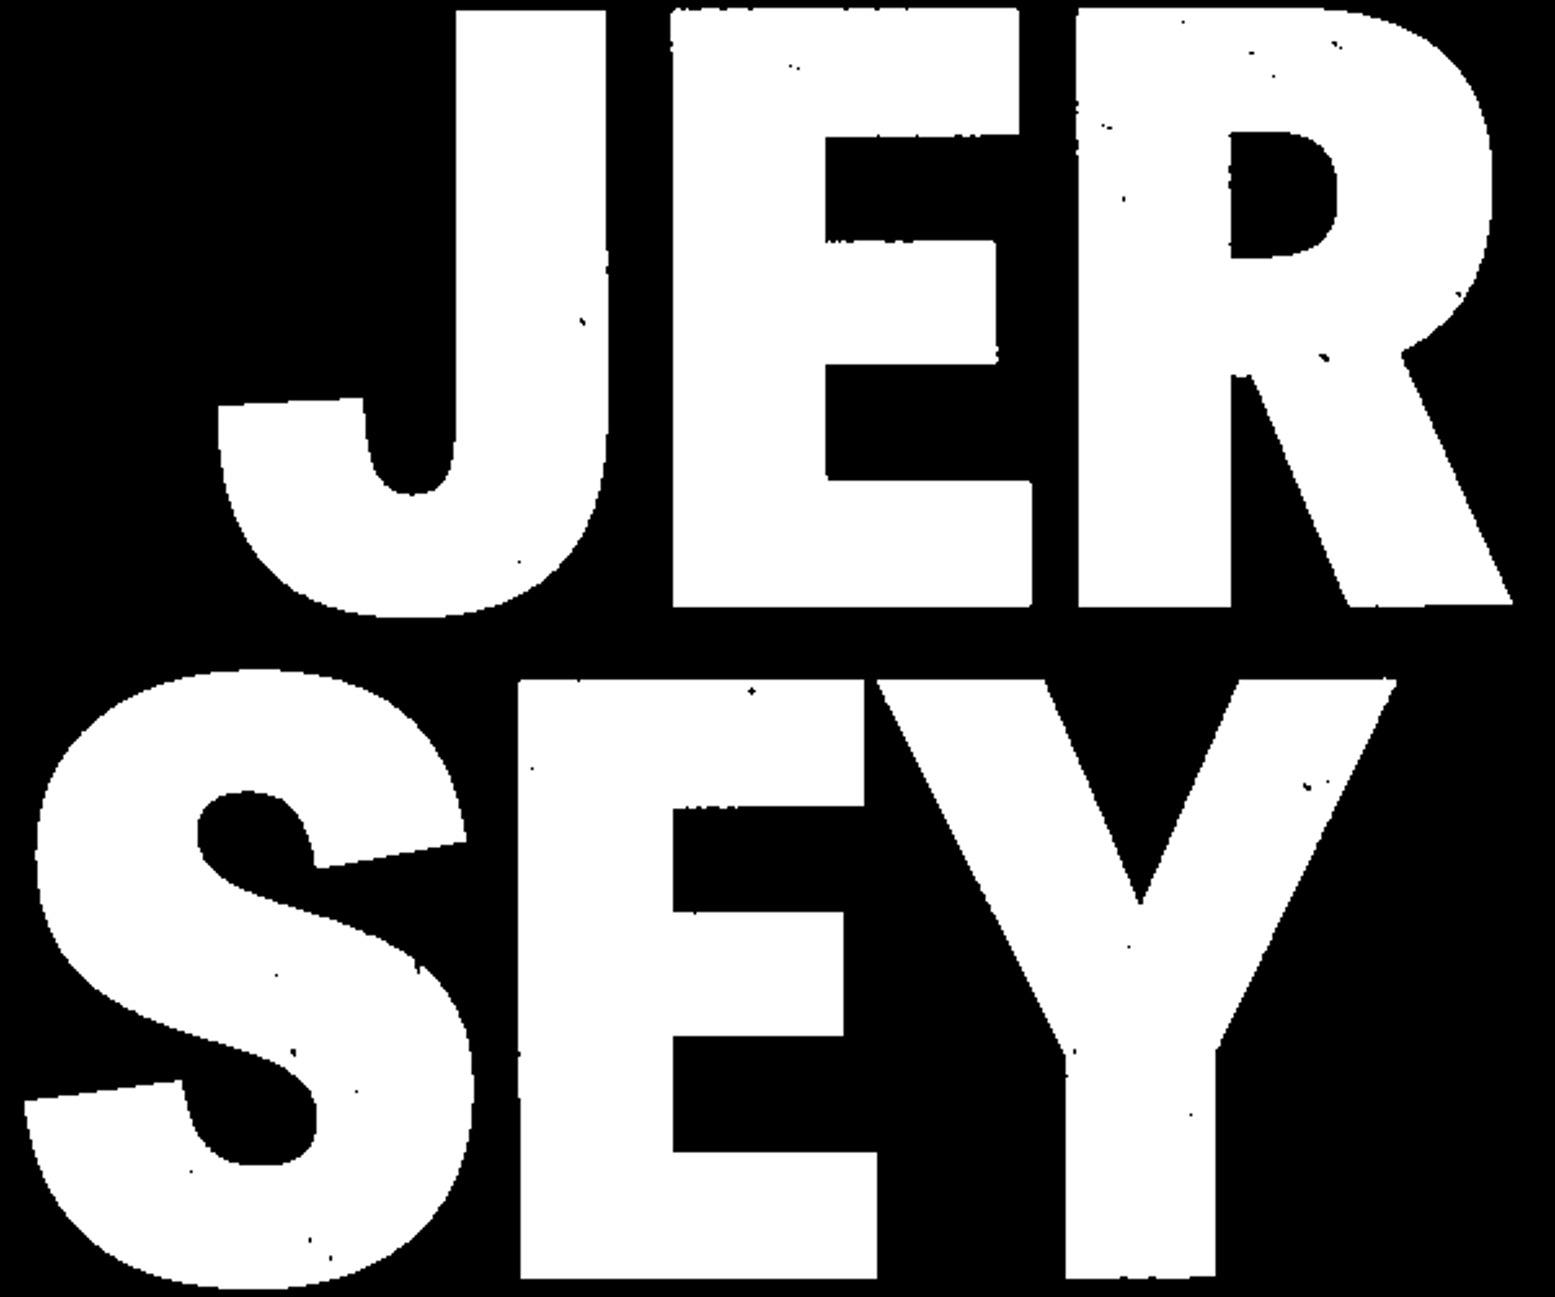 JERSEY